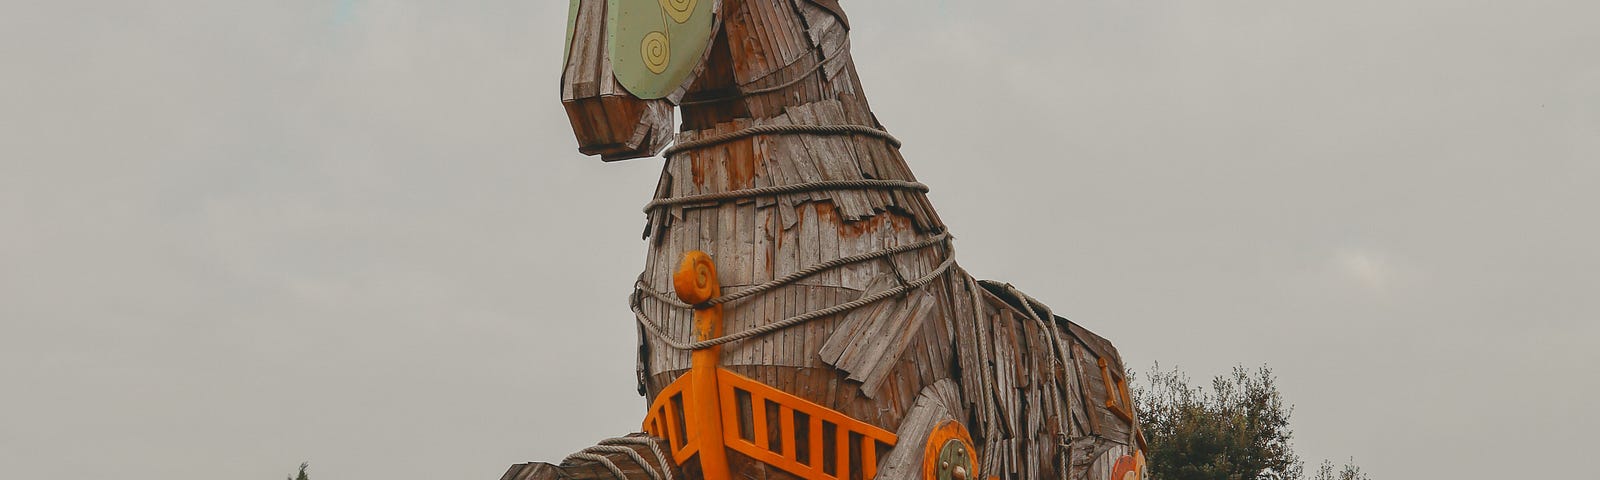 A modern-day replica of the Trojan horse